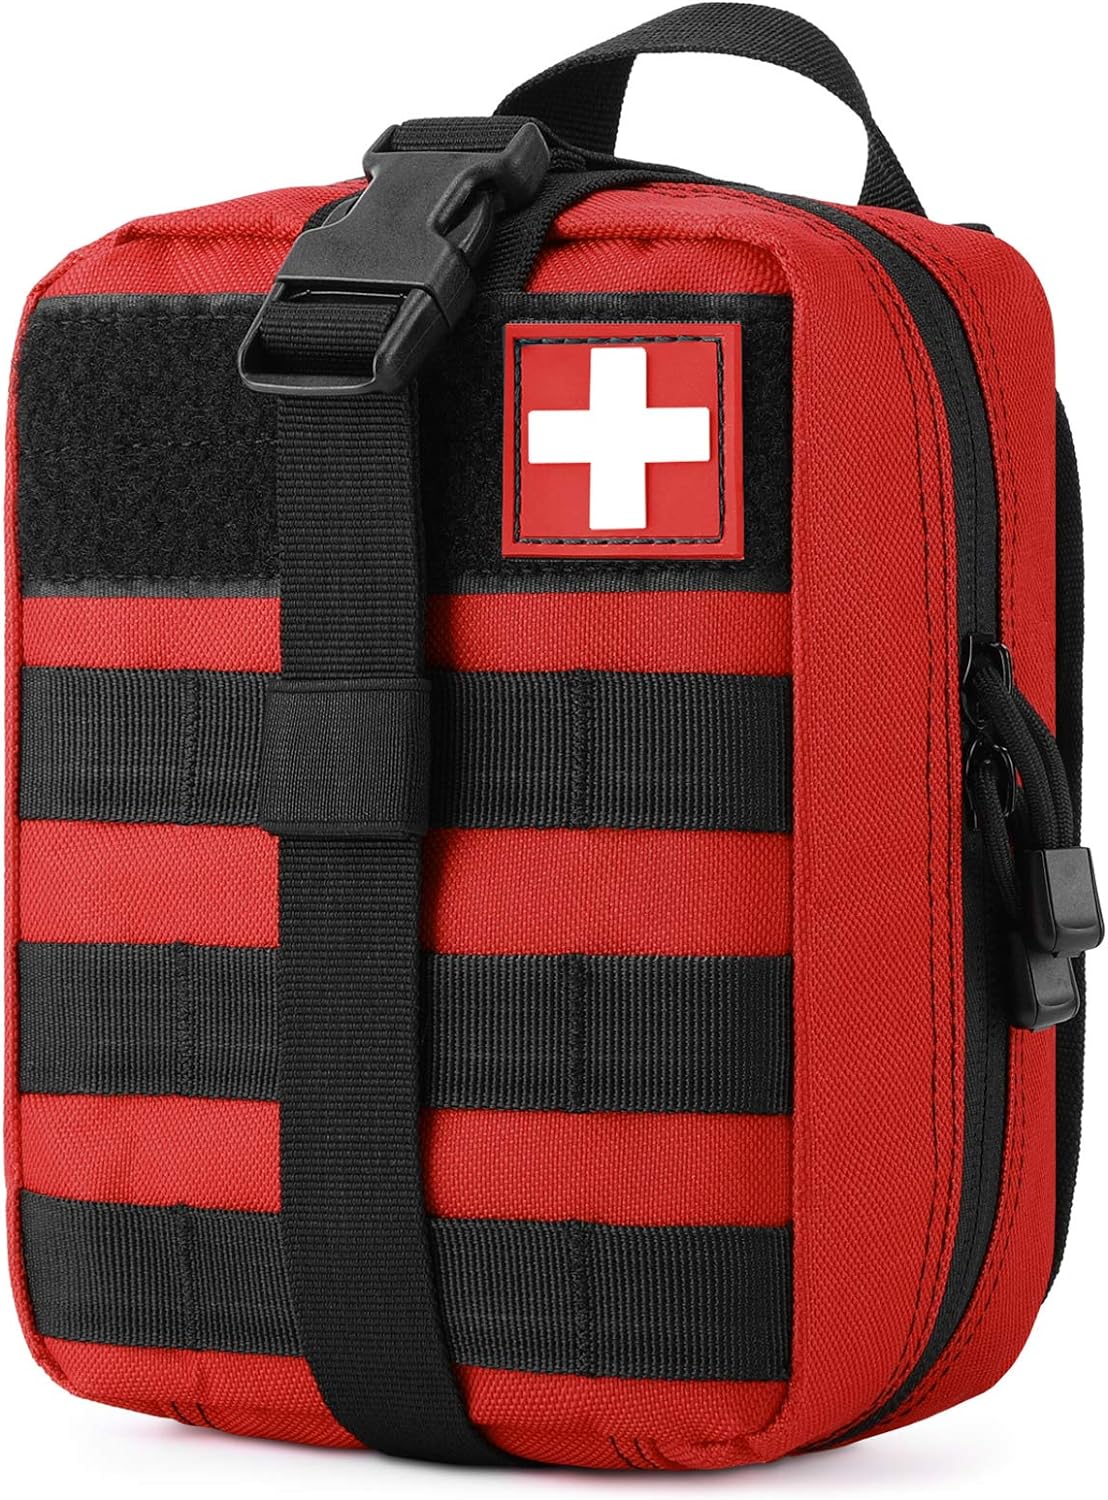 MOLLE Medical Pouch EMT First Aid Pouch Rip-Away IFAK Tactical Utility Bag för utomhusaktiviteter Medicinsk tillbehör